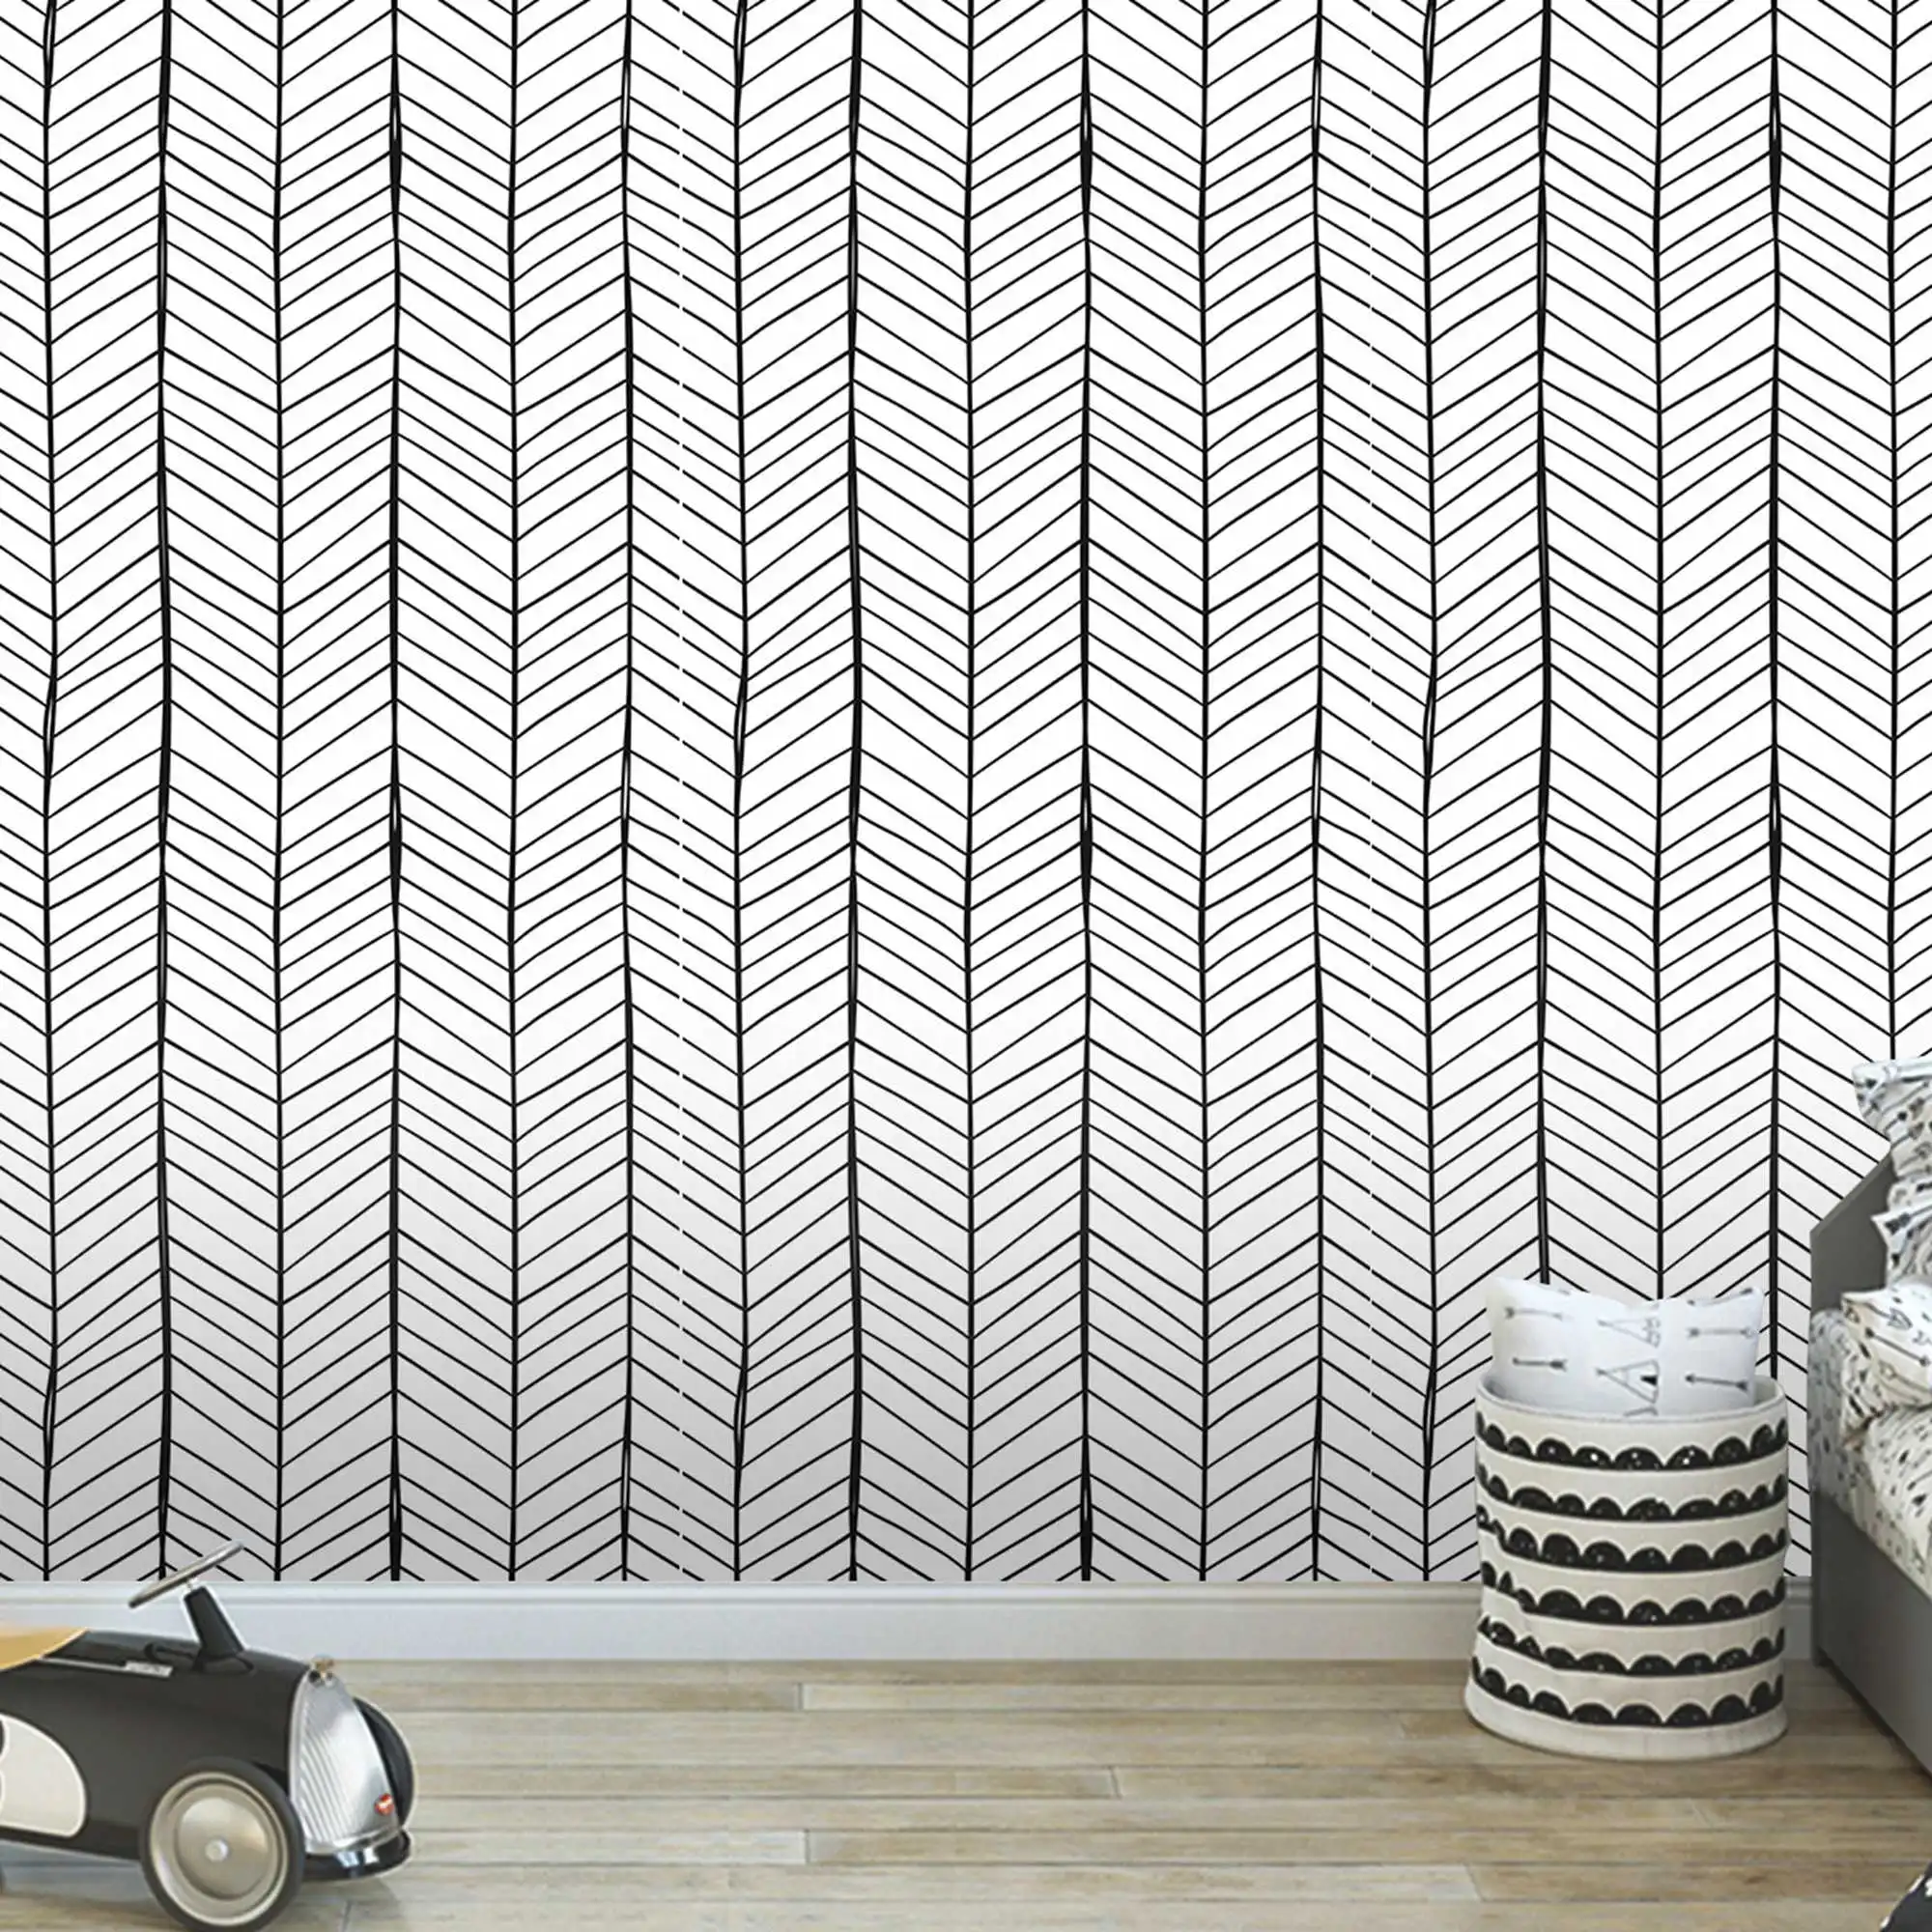 Beibehand-papel de parede clássico estilo nórdico, preto e branco